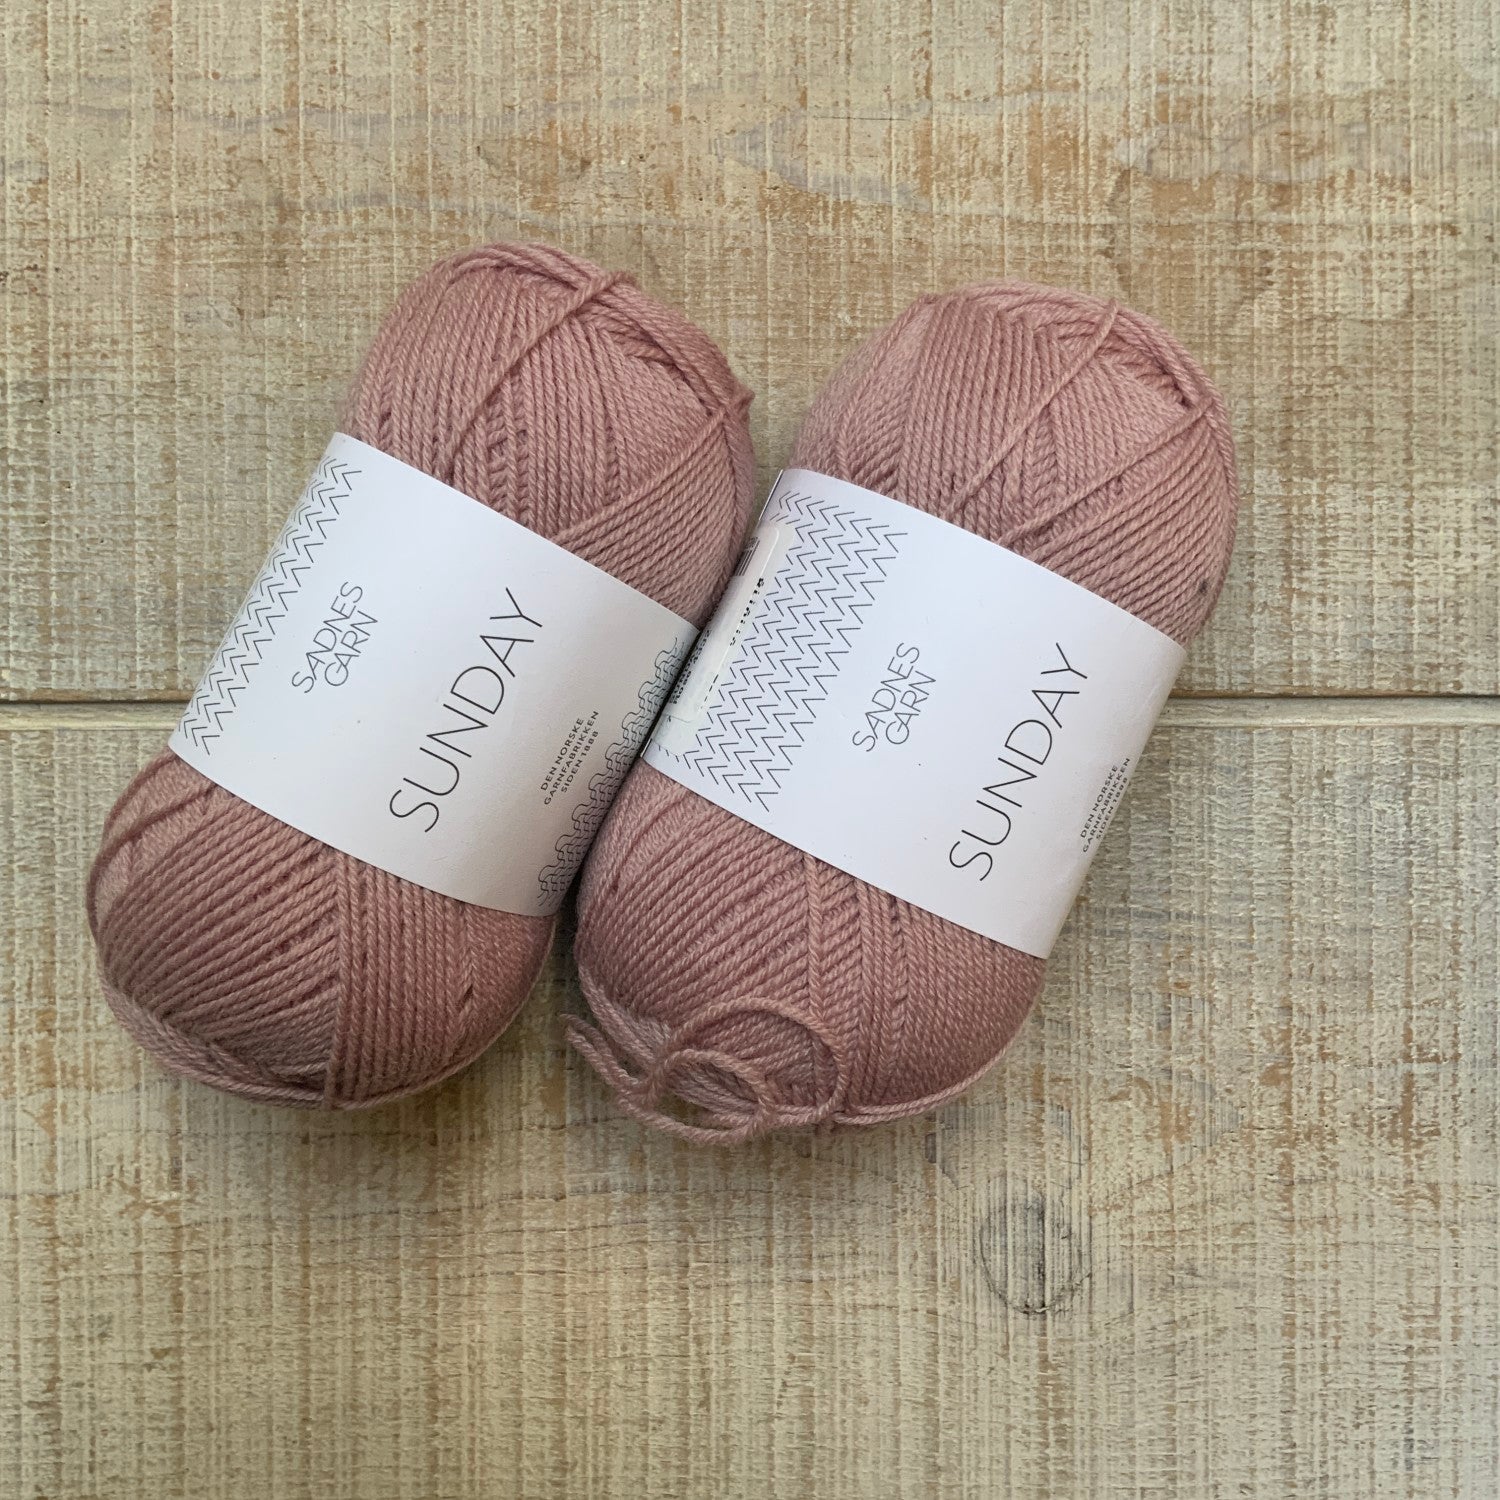 Sunday (merino wool) yarn by Sandnes Garn